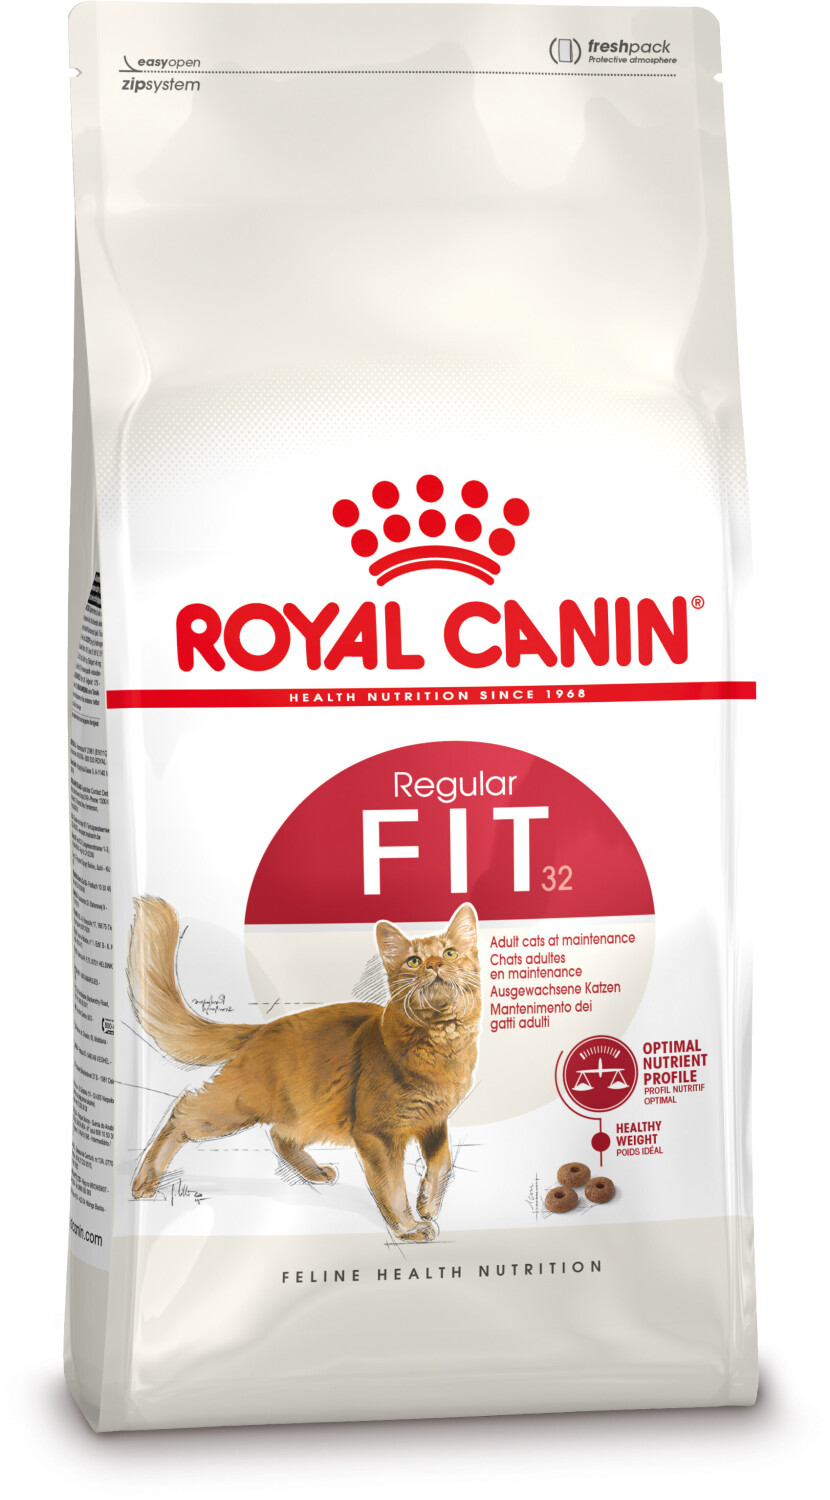 Royal Canin Fit 32 Regular 4kg a € 29,99 (oggi) | Migliori prezzi e